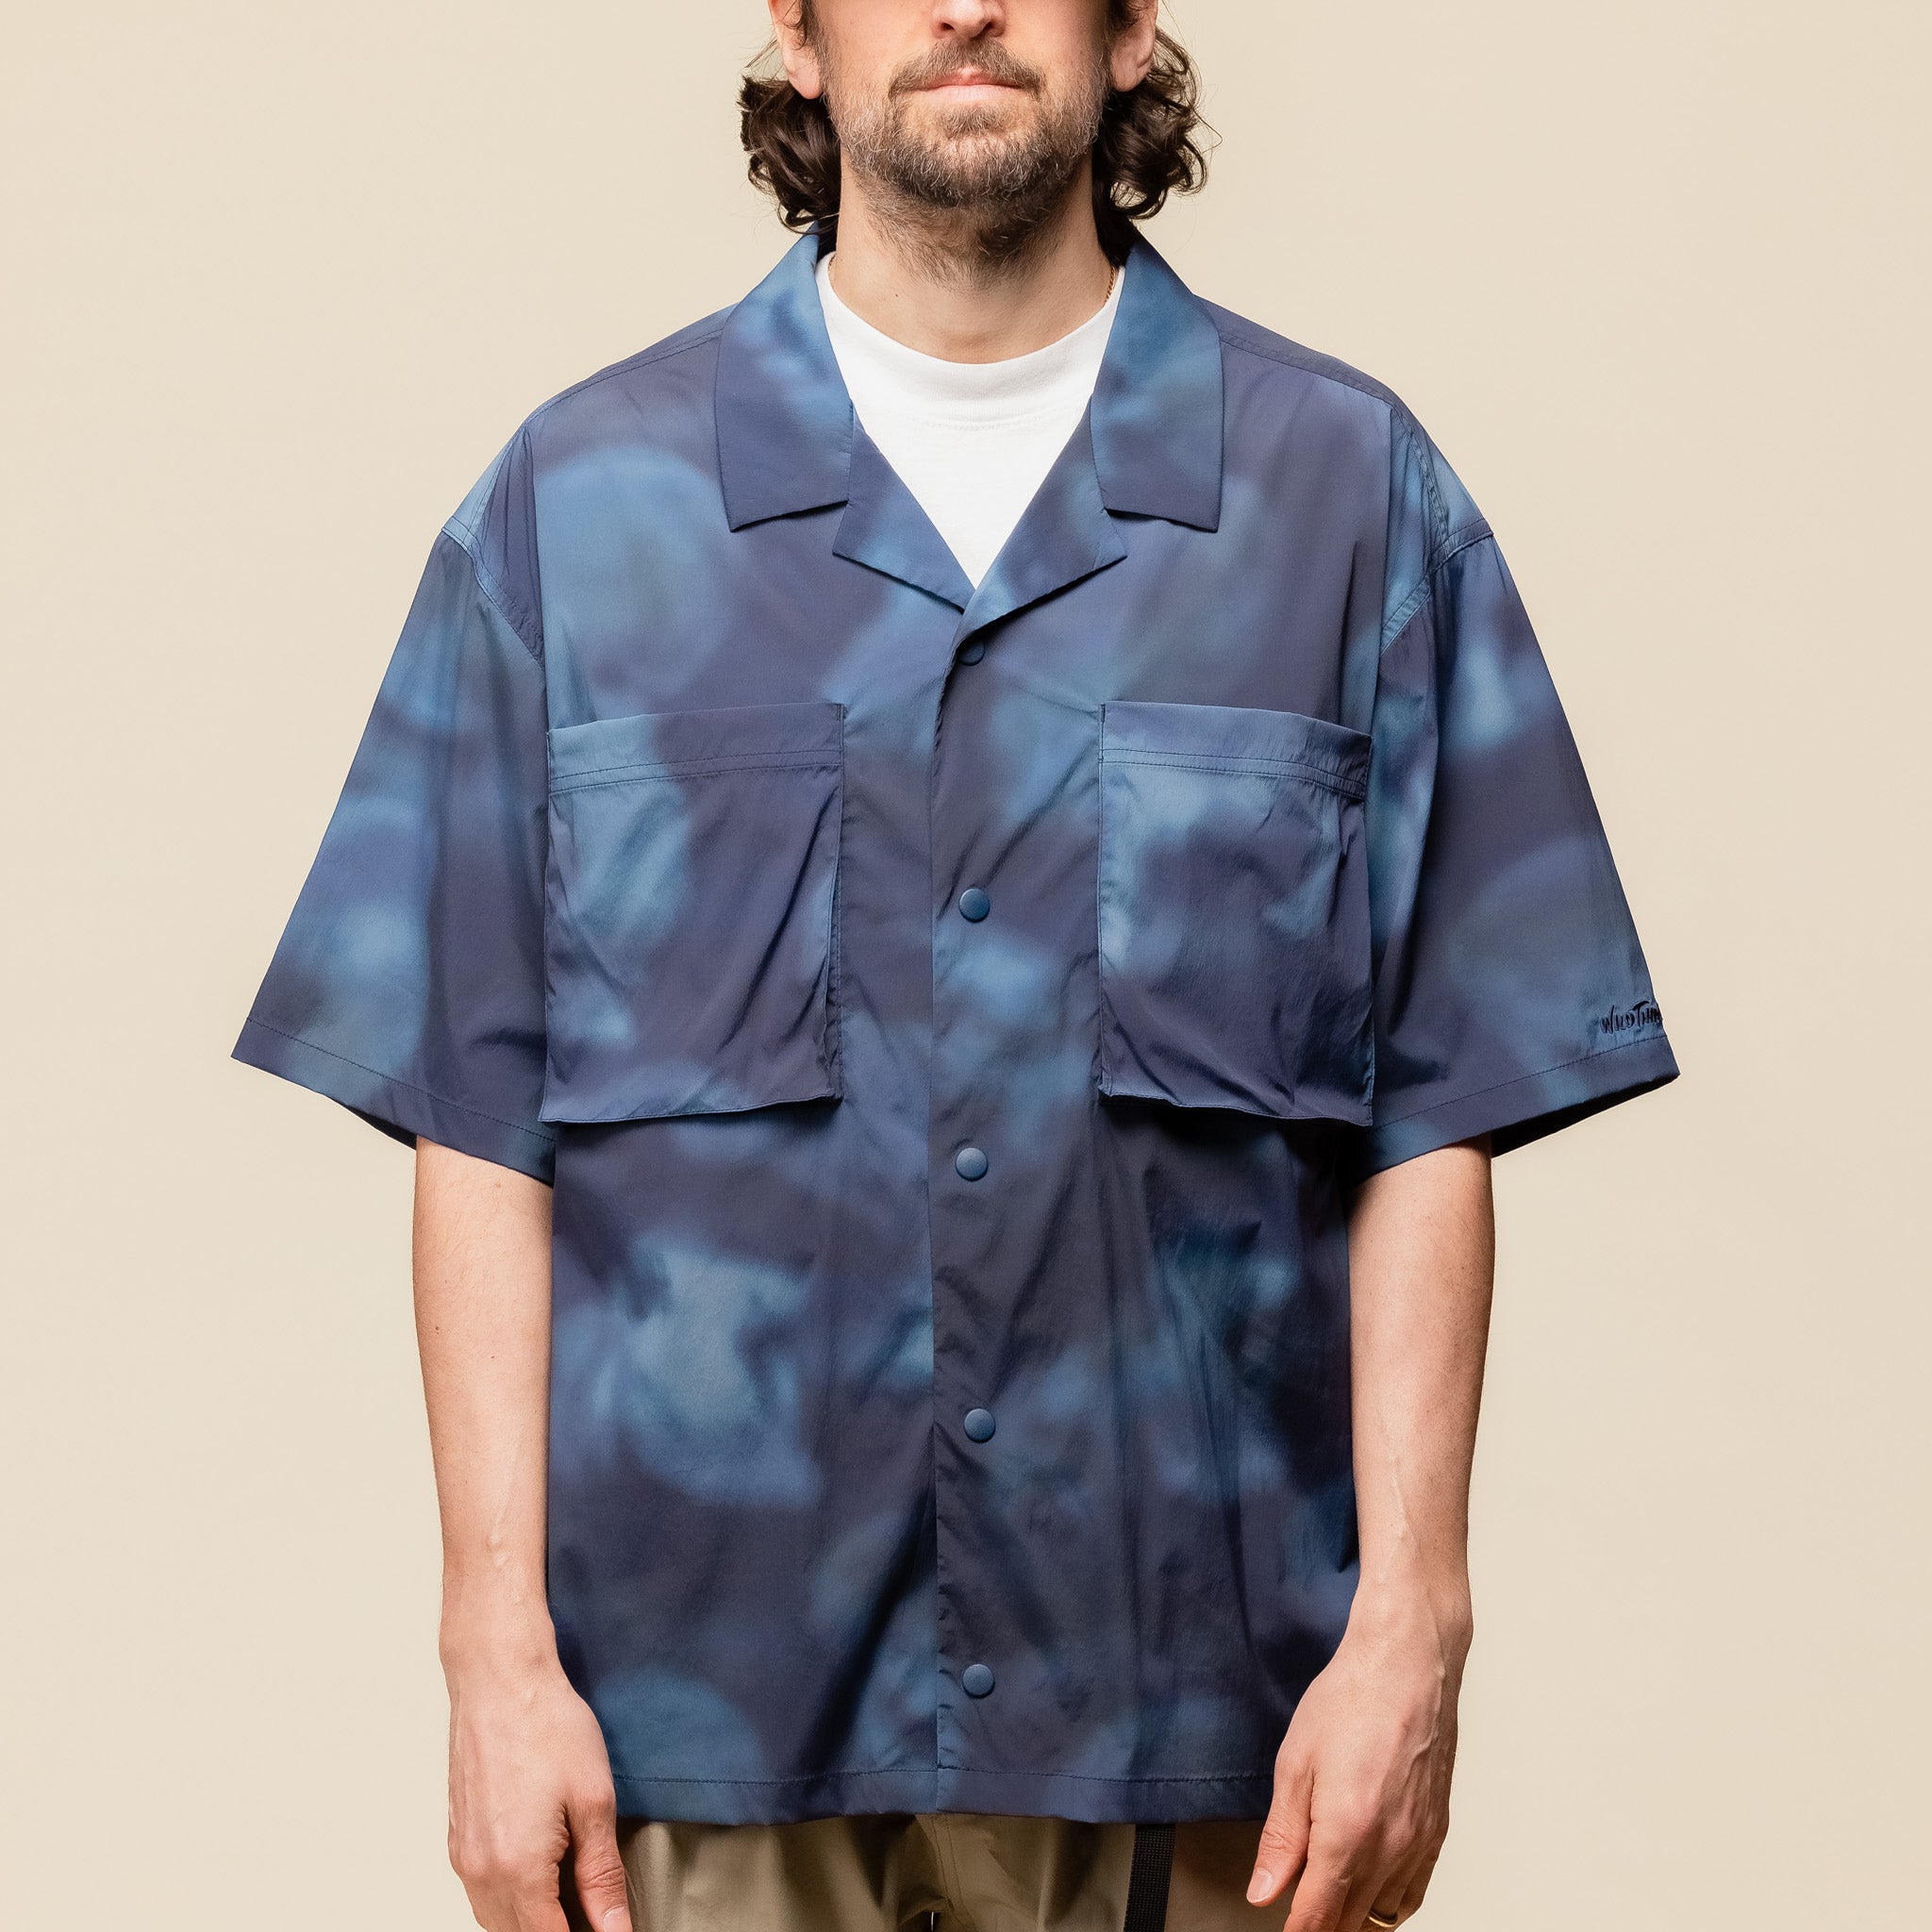 Wild Things Japan - Short Sleeve Camp Shirt - Nature Mosaic Blue